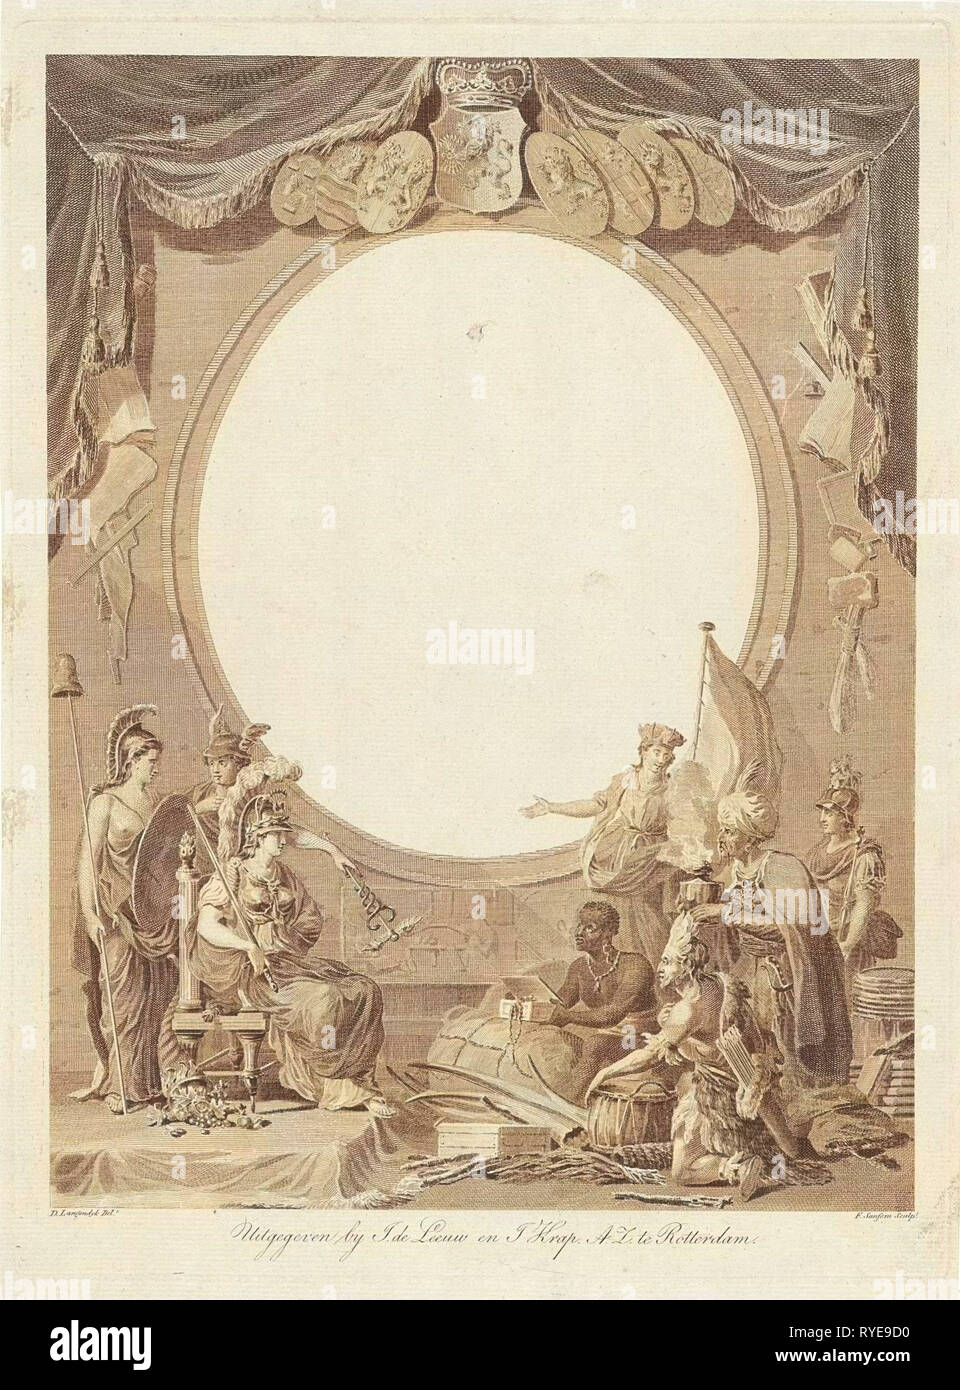 Over seas continents offer gifts to the Republic, Franciscus Sansom, Jan Krap Az, Jan de Leeuw publisher, 1784-1790 Stock Photo